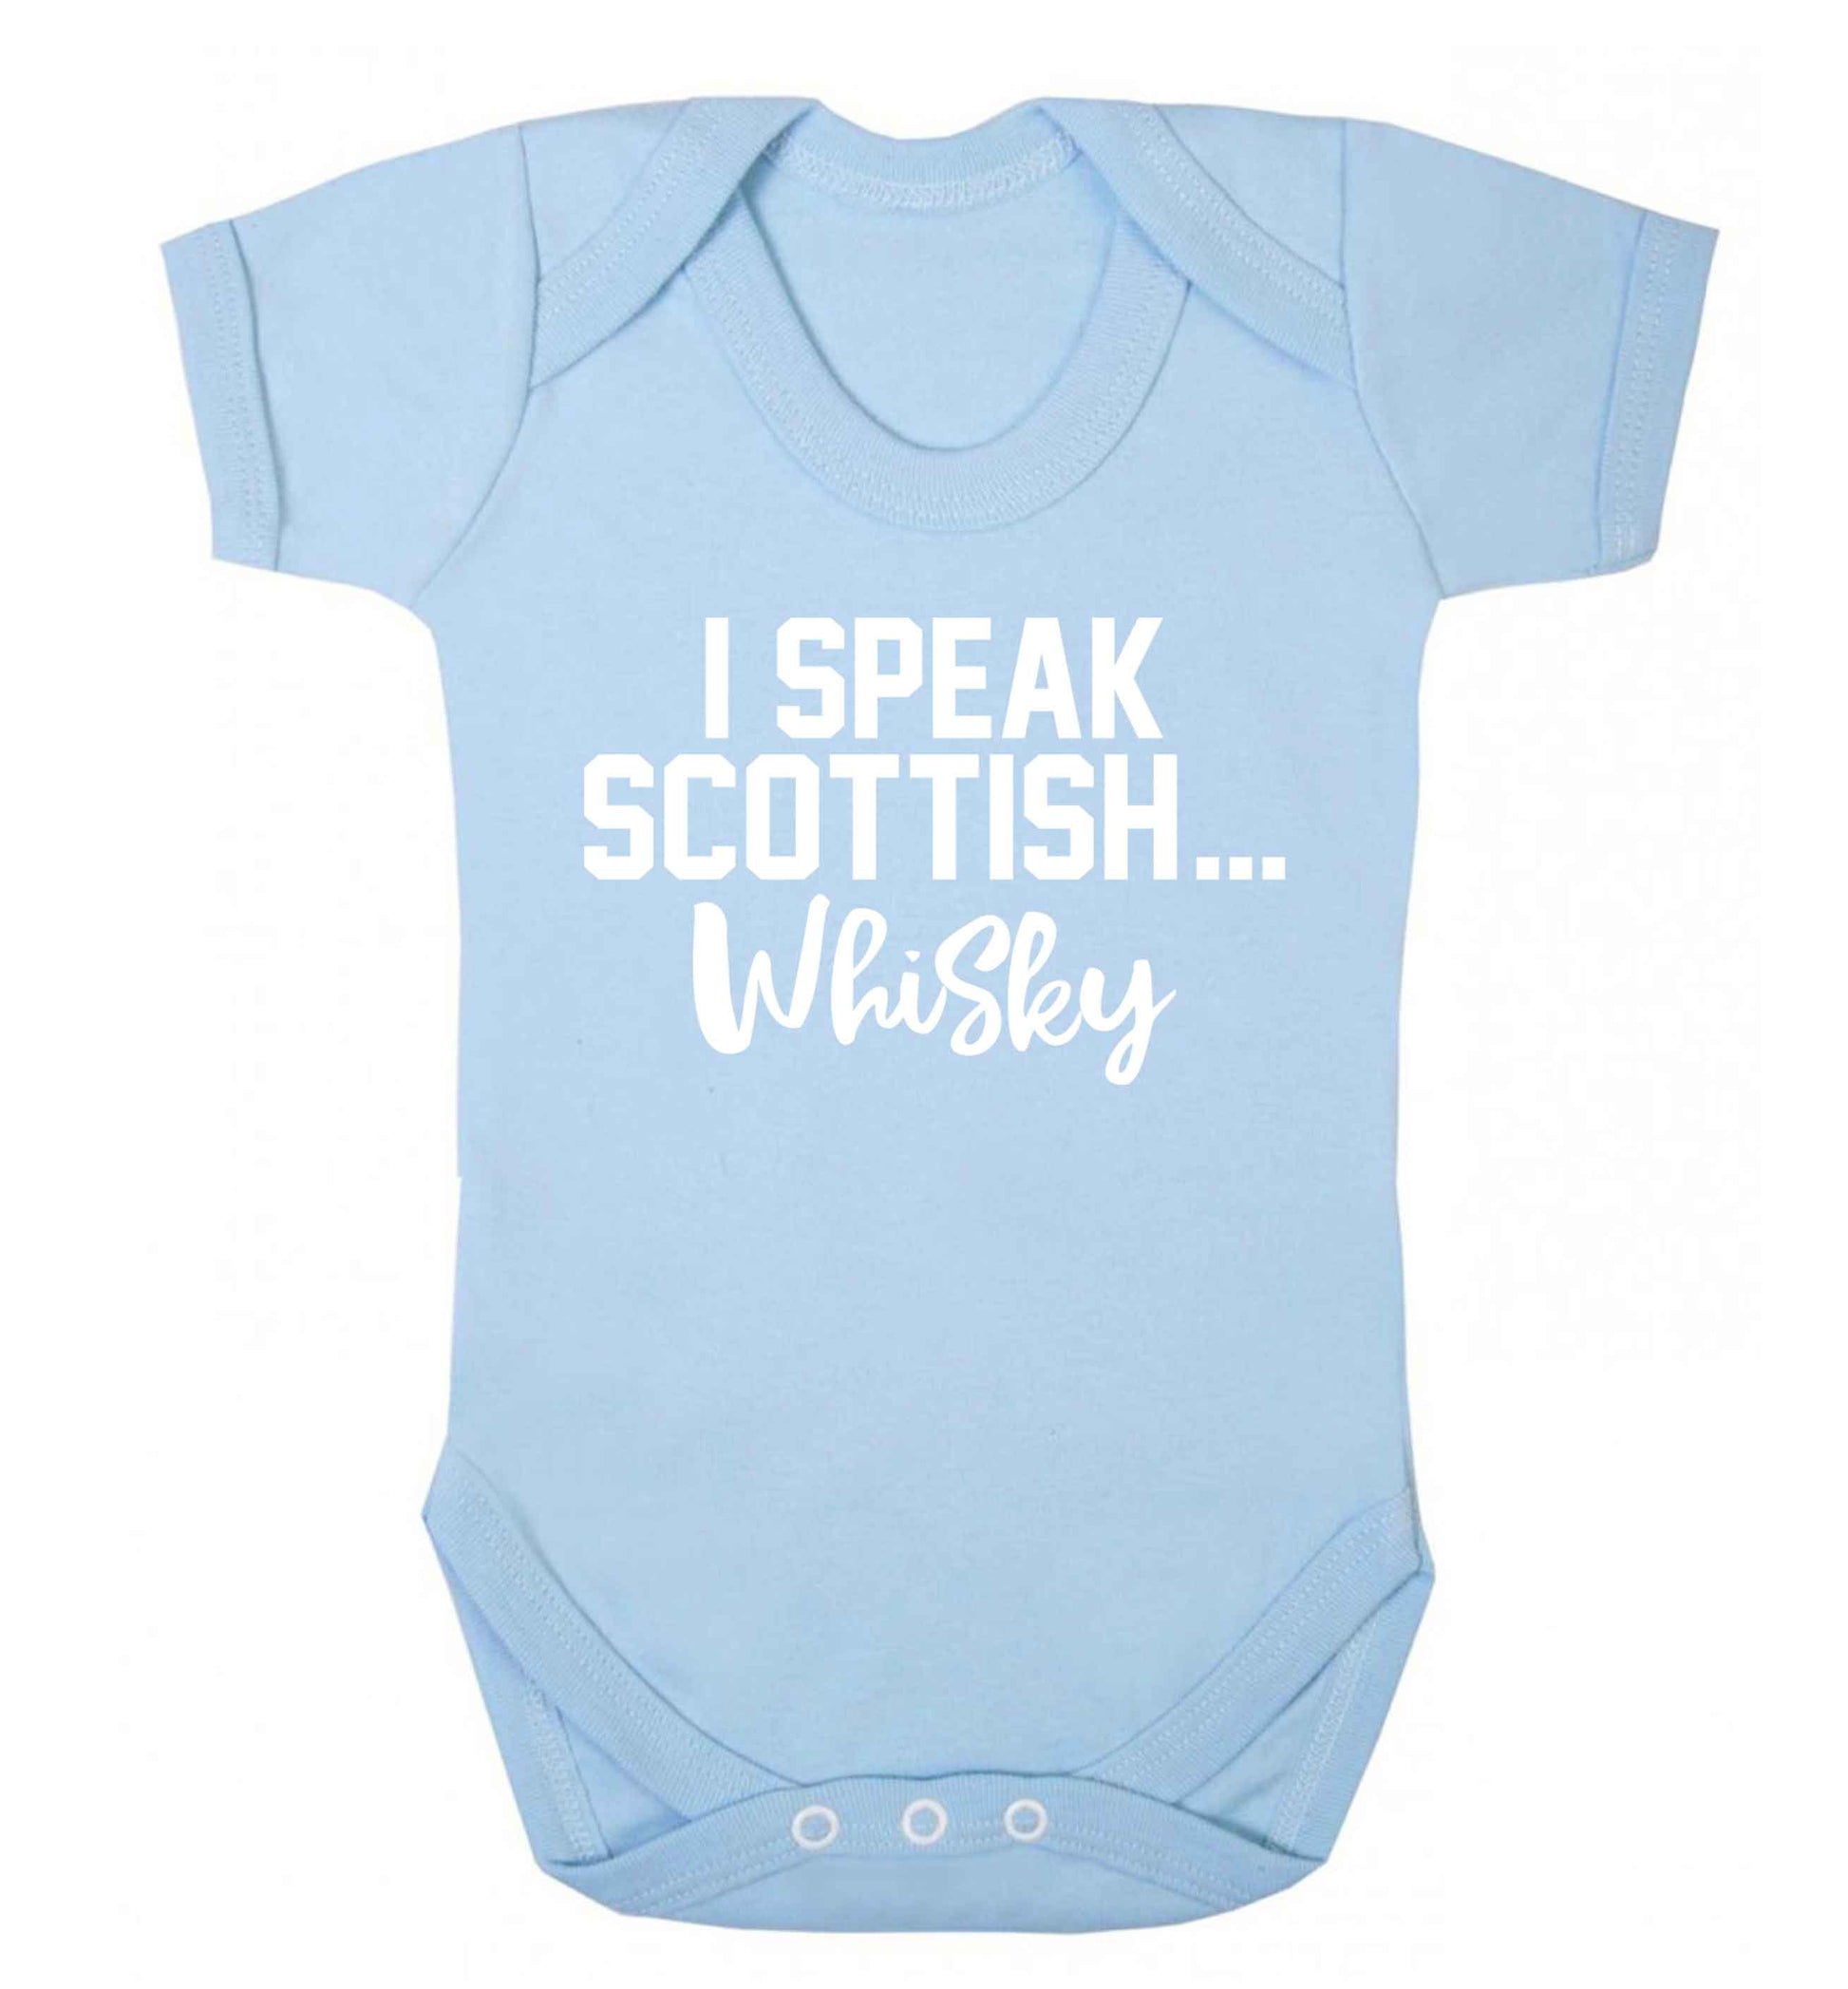 I speak scottish...whisky Baby Vest pale blue 18-24 months